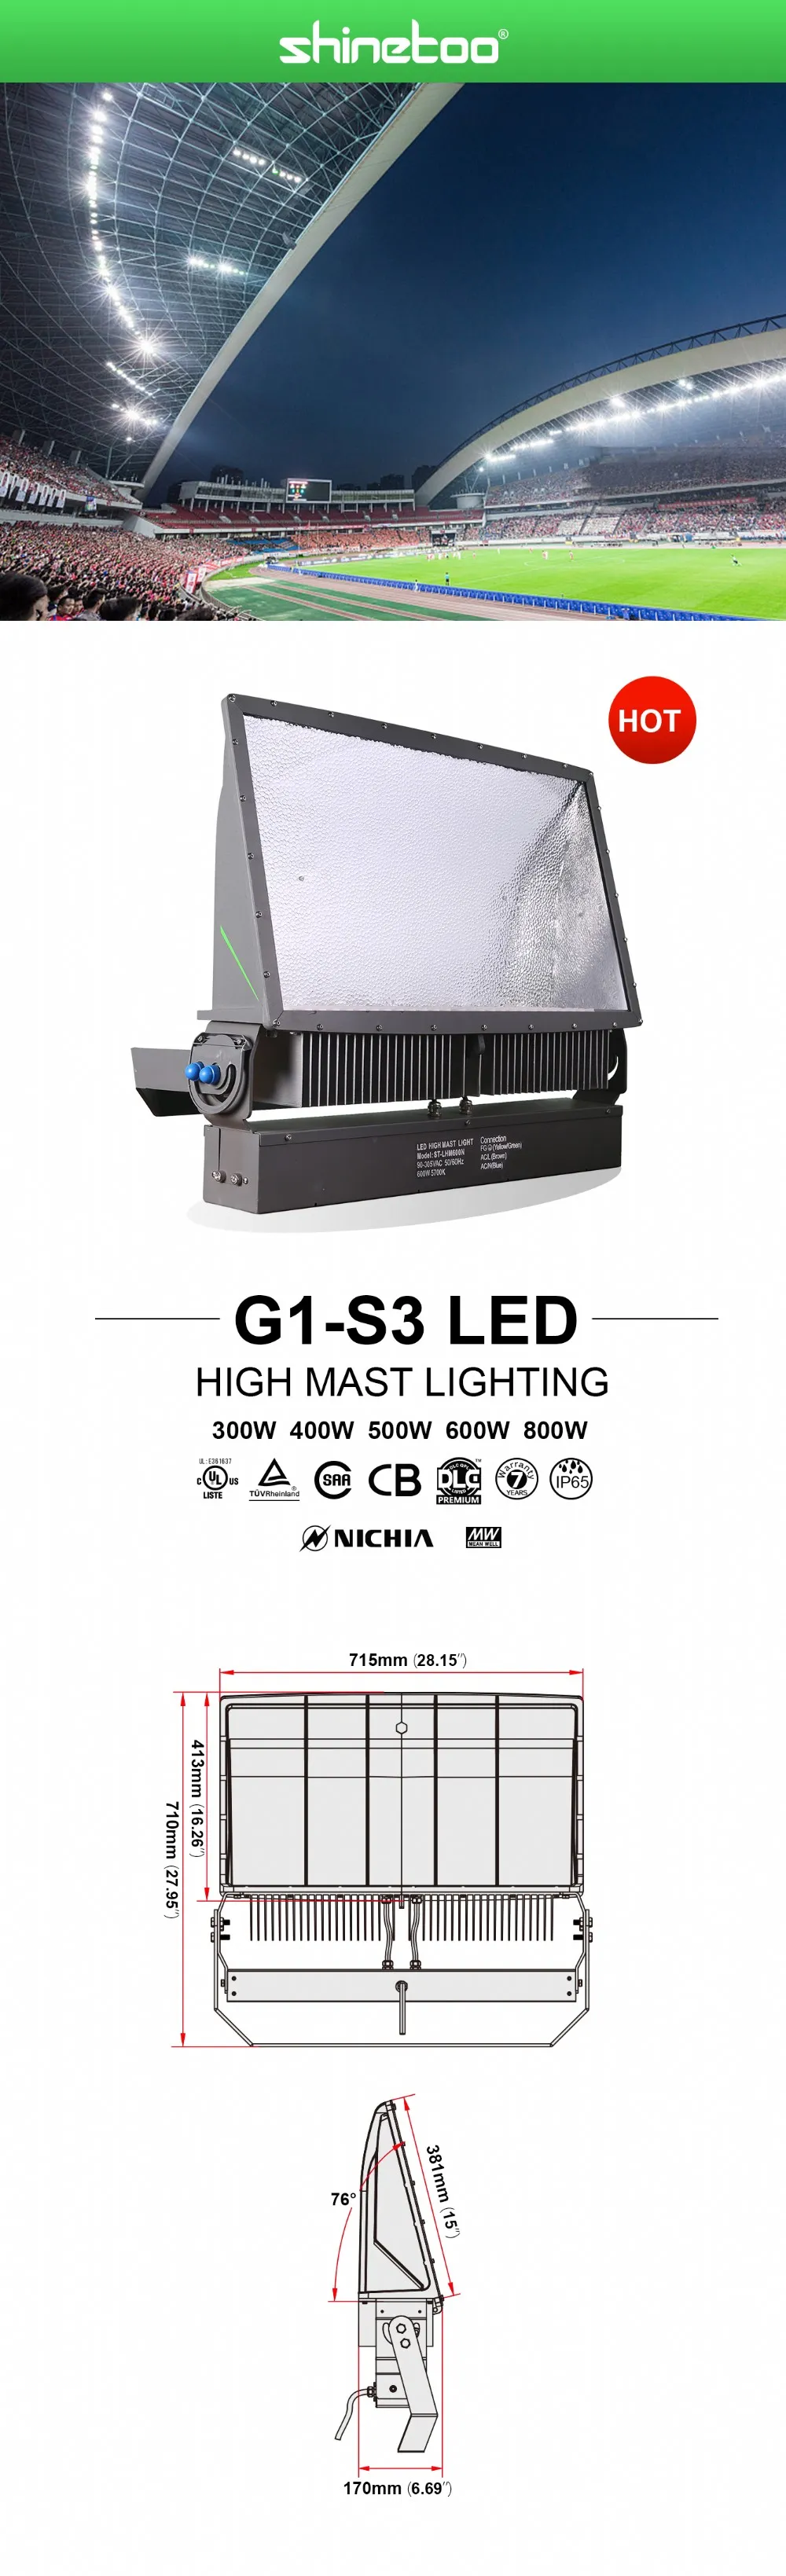 G1-S3 LED High Mast Flood Lighting